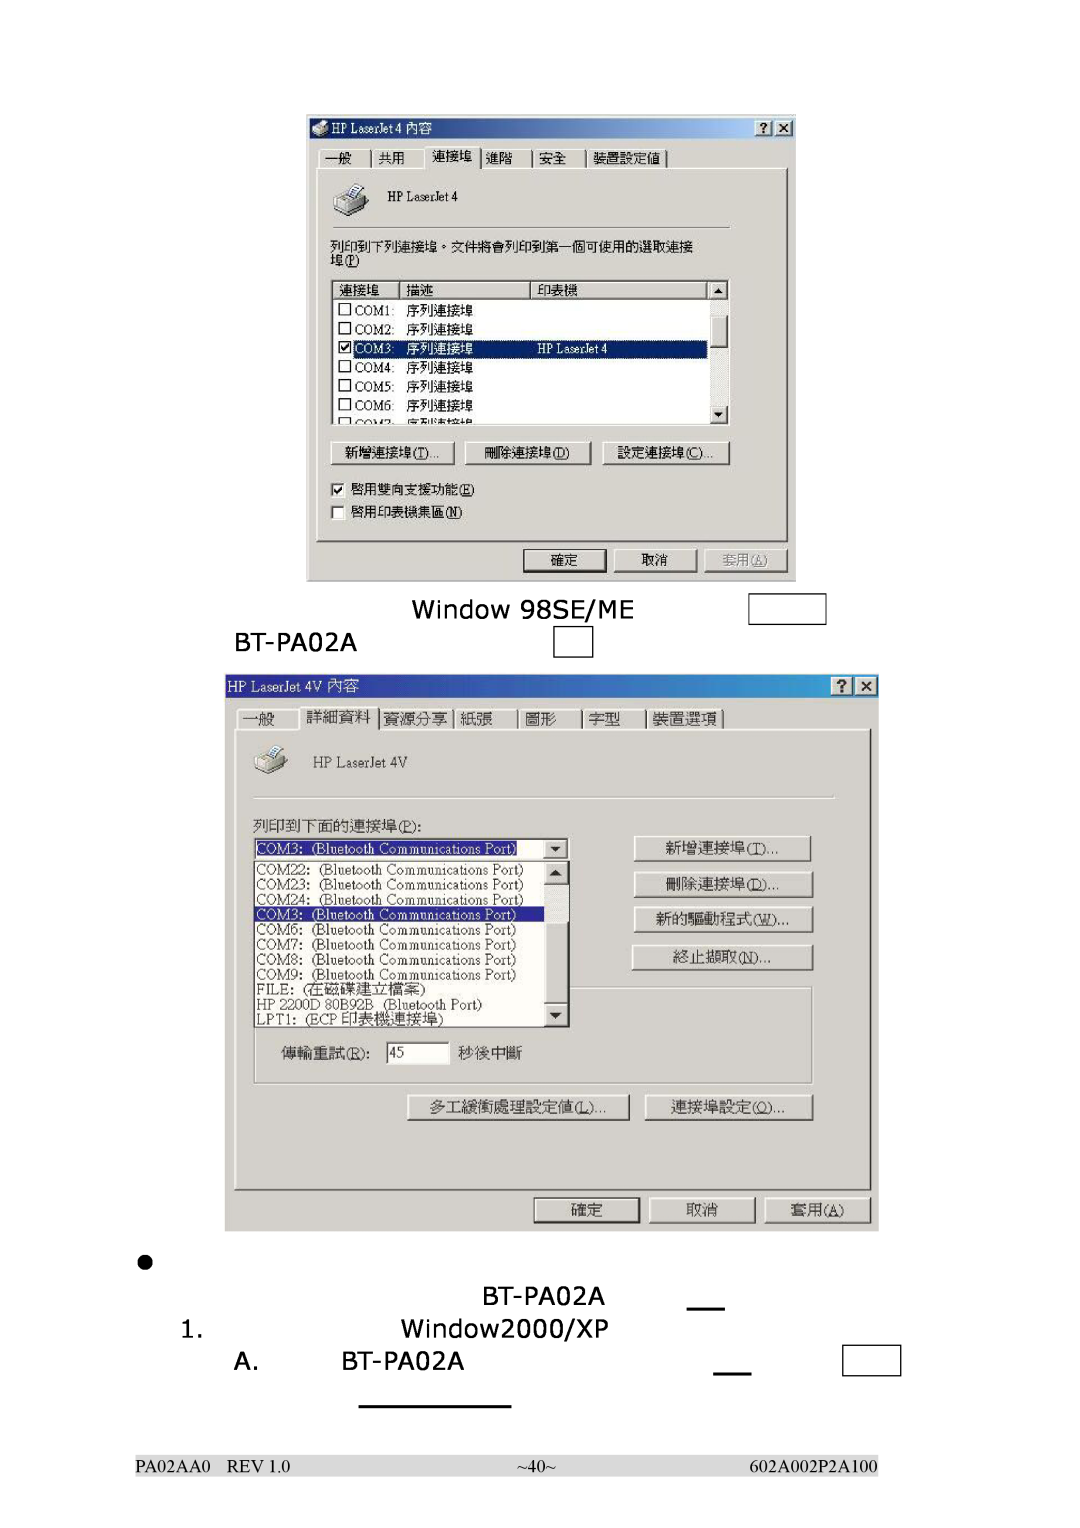 EPoX Computer manual Window 98SE/ME BT-PA02A, Window2000/XP, A. BT-PA02A, PA02AA0 REV, ~40~, 602A002P2A100 